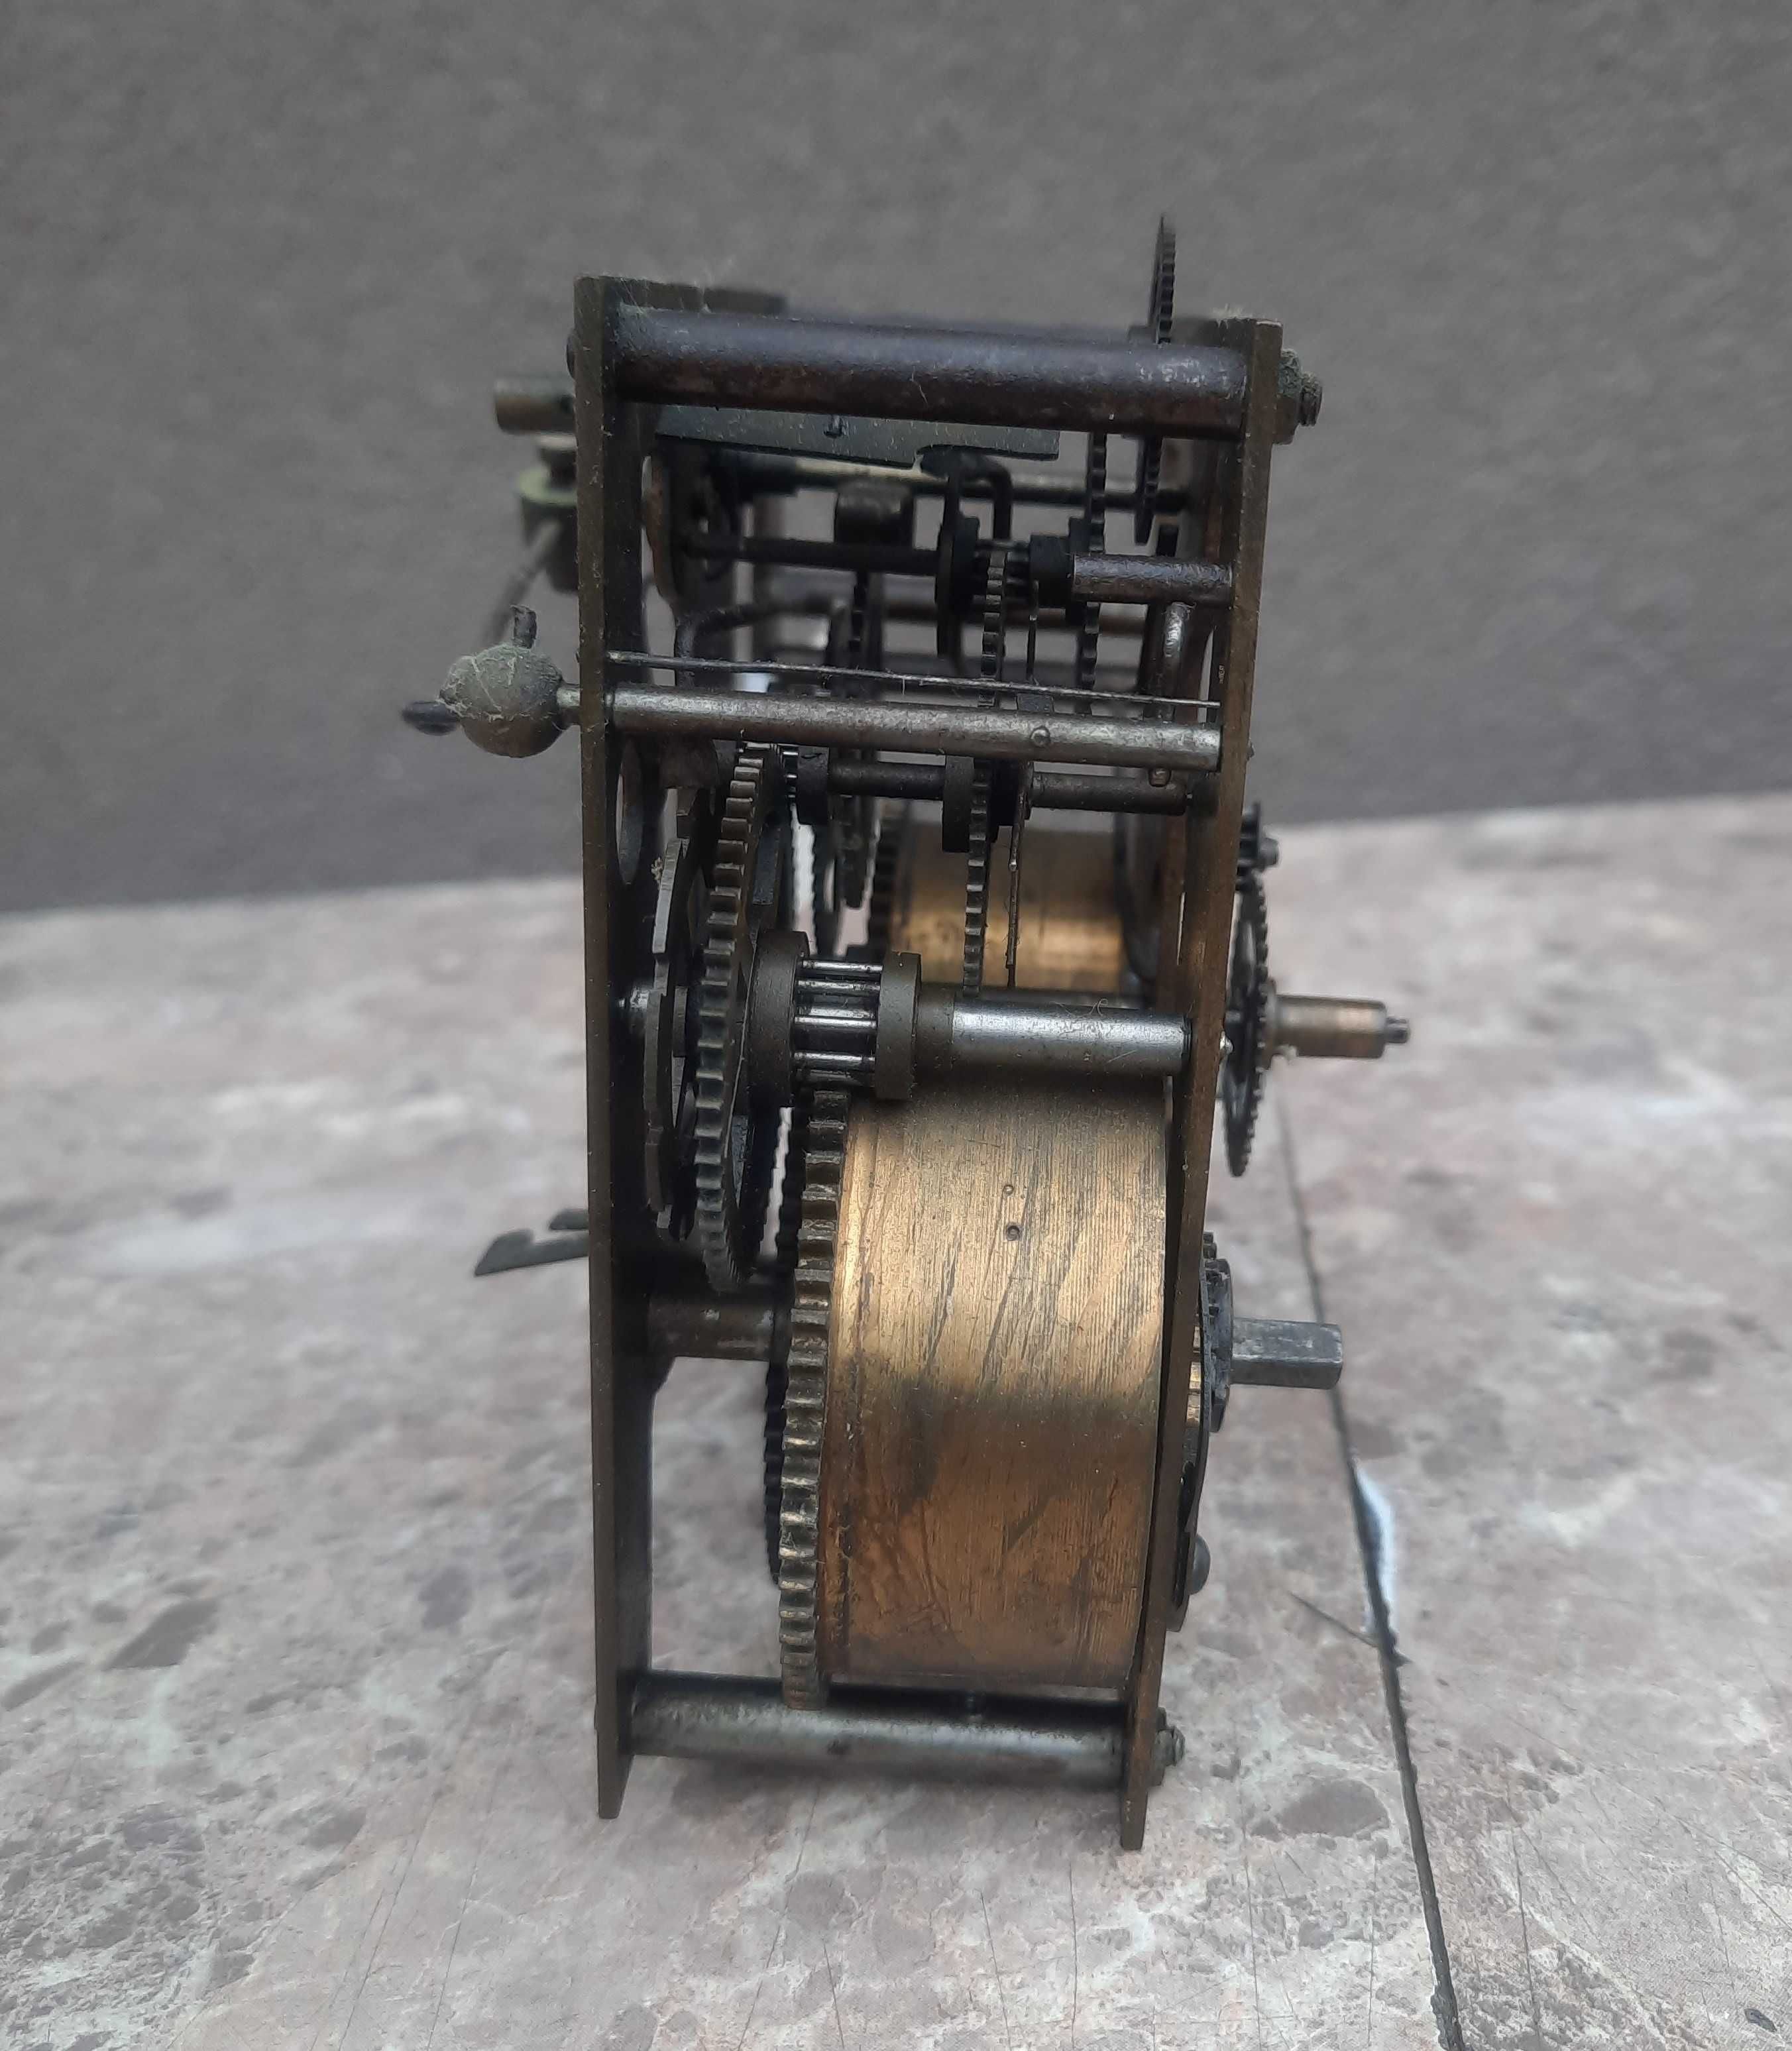 396 Mechanizm starego zegara ściennego Junghans